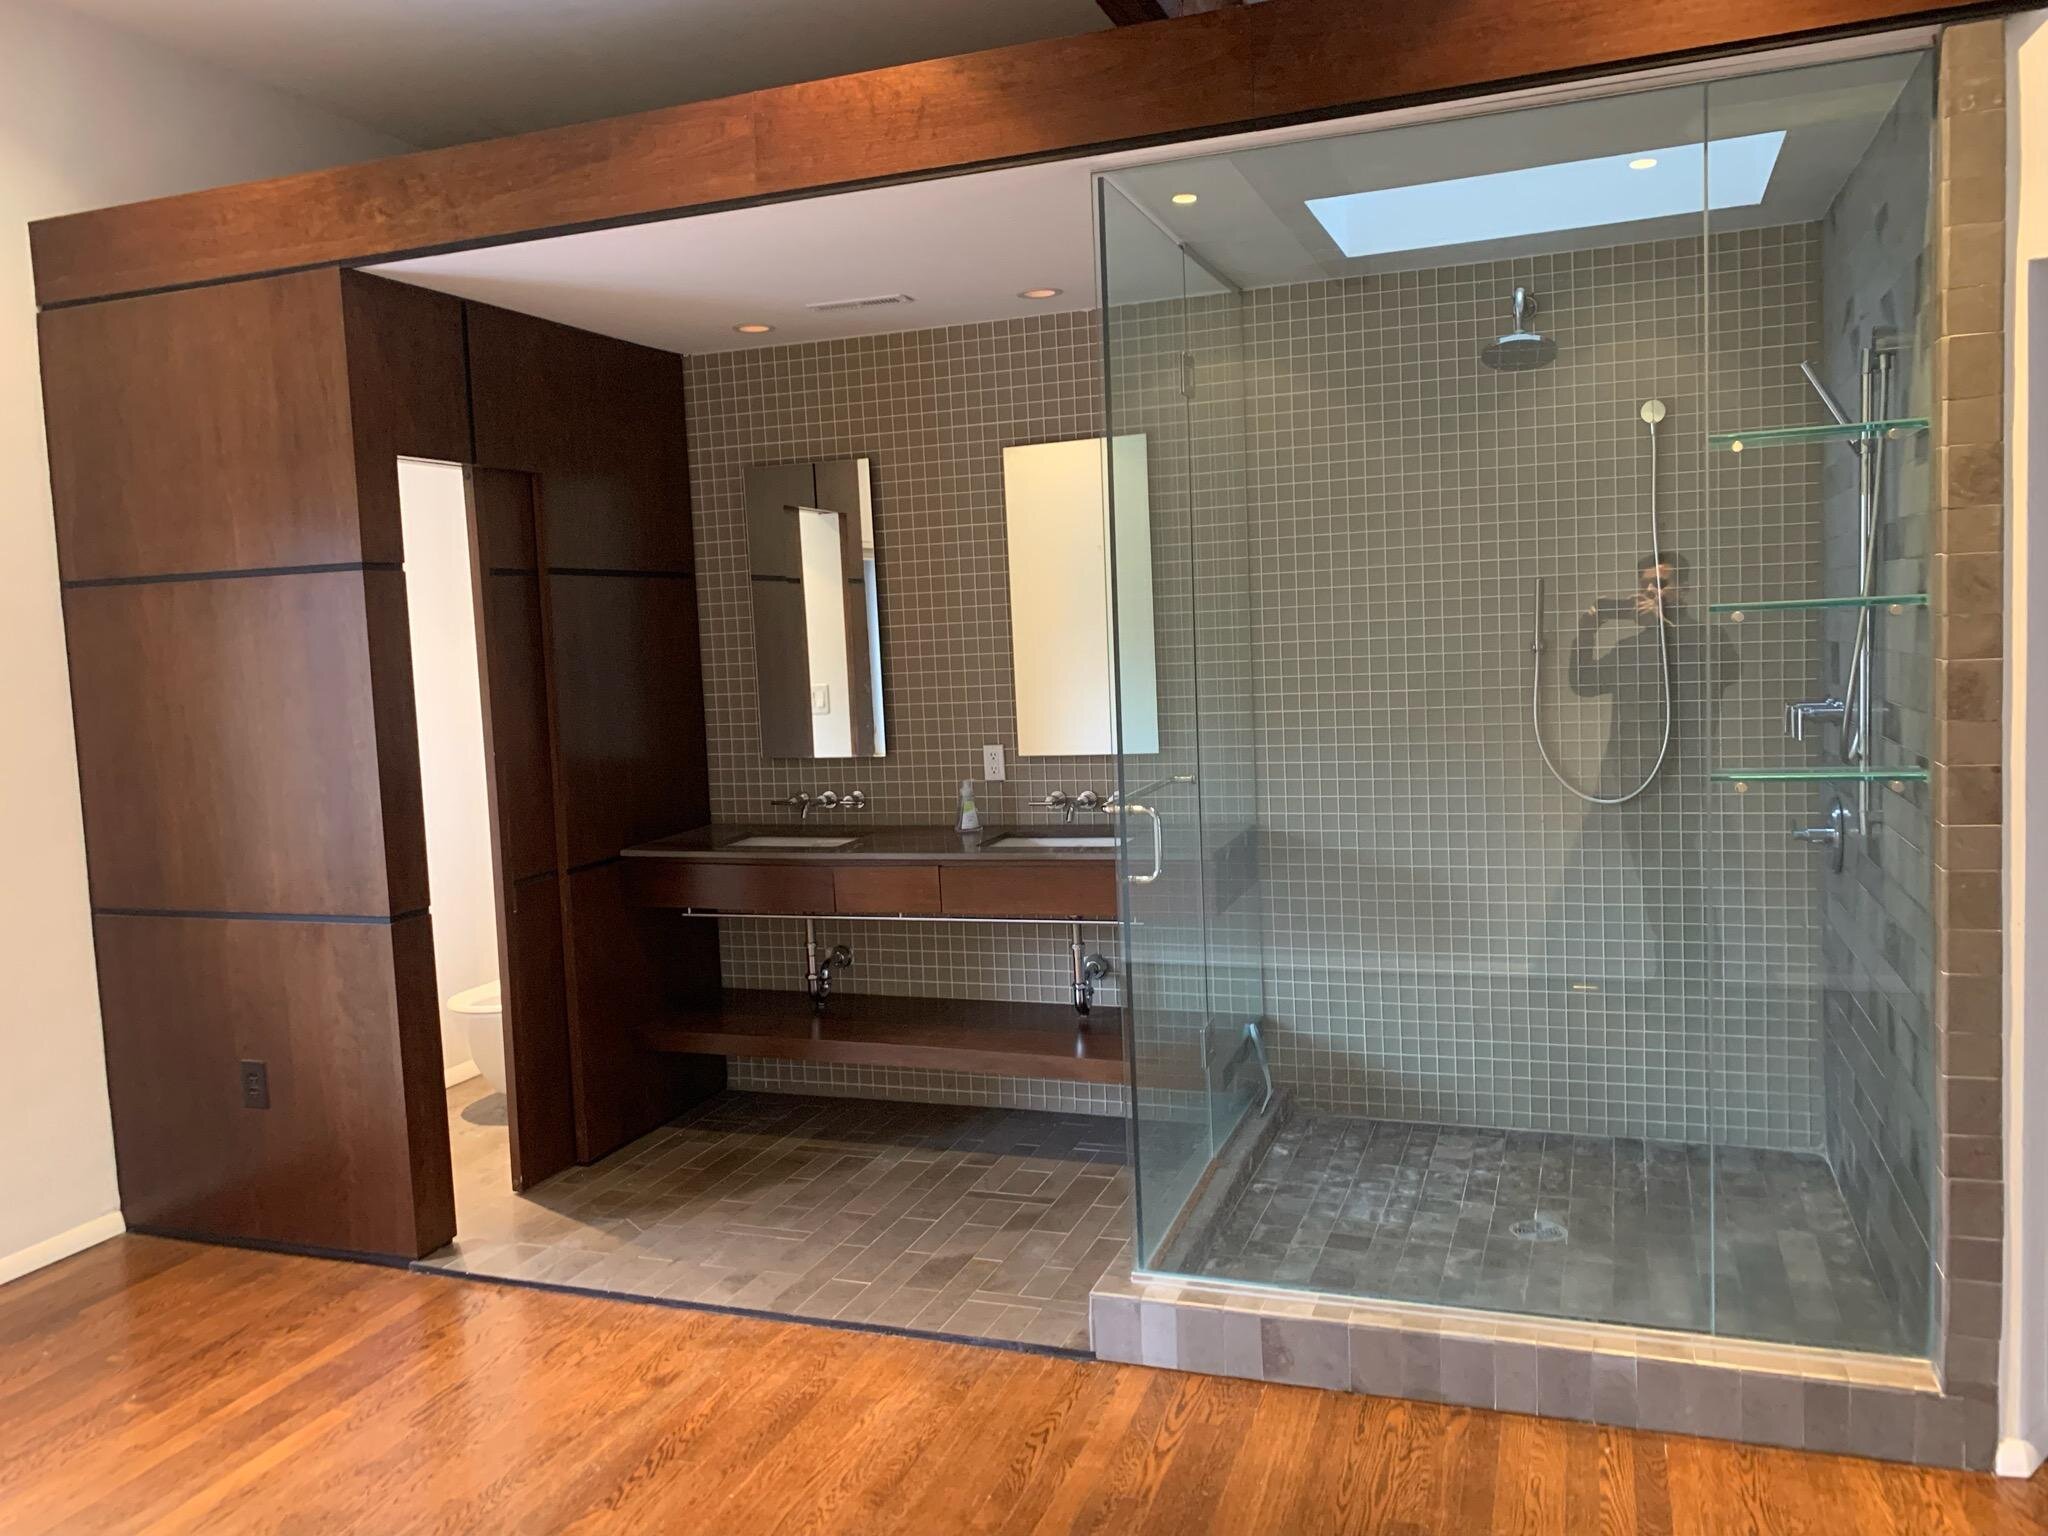  Condo in Washington D.C. with an extraordinarily open bathroom concept in master bedroom. 